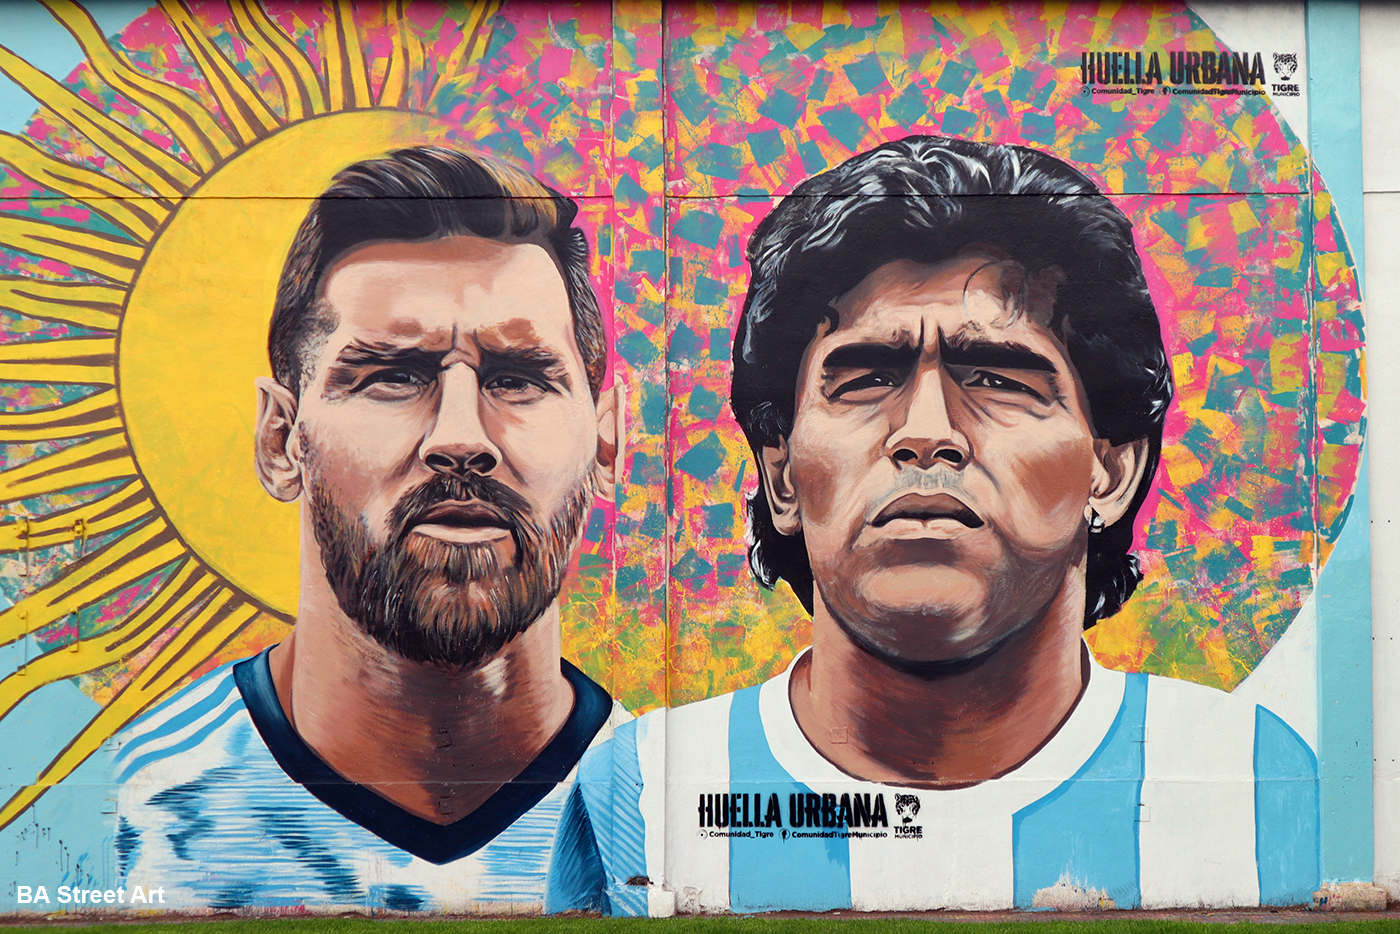 Download Messi Iphone Cool Monochrome Artwork Wallpaper | Wallpapers.com